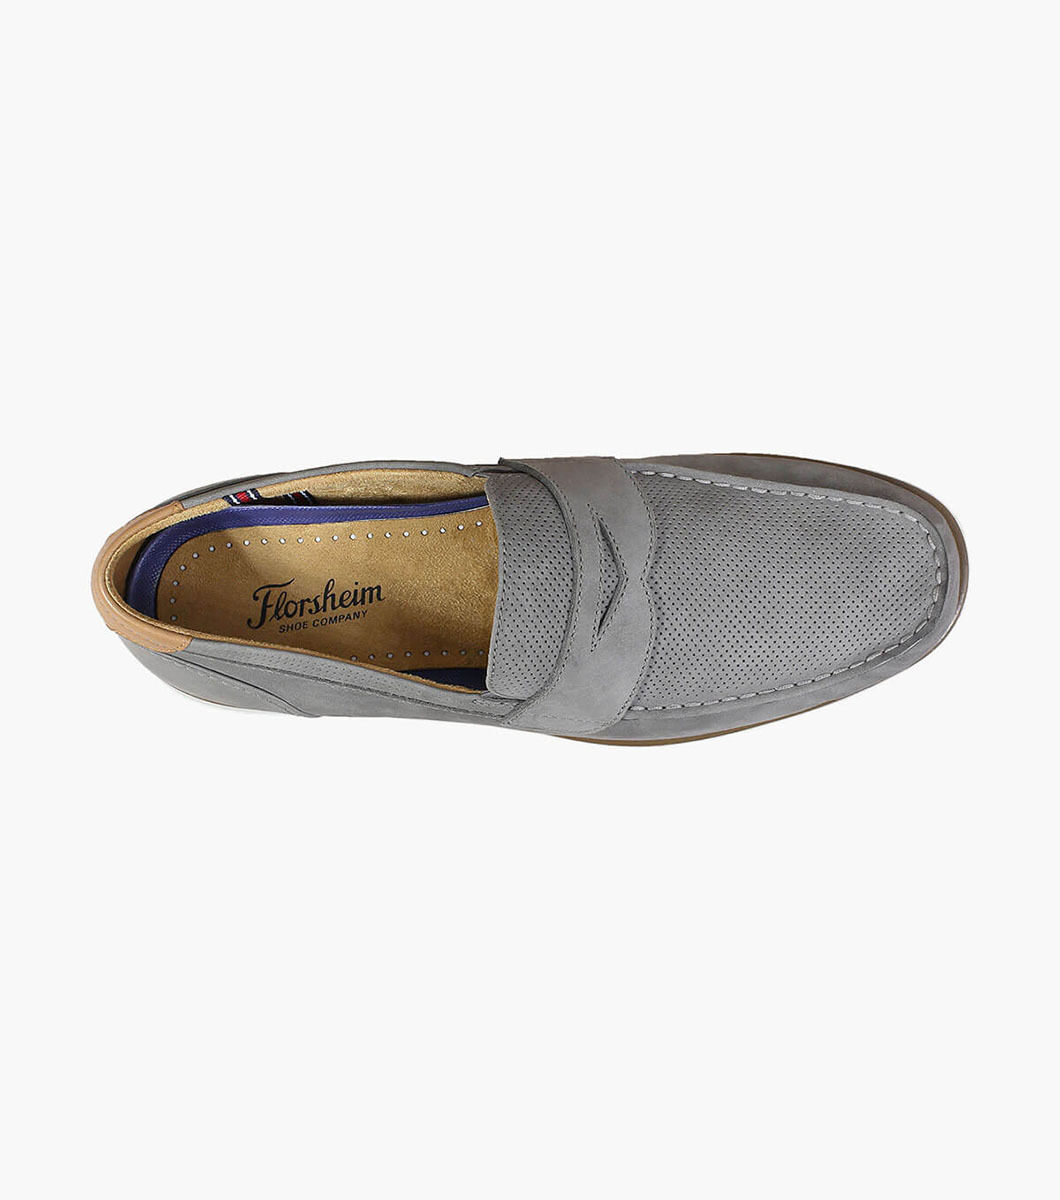 Atlantic Moc Toe Penny Loafer Men's Casual Shoes | Florsheim.com